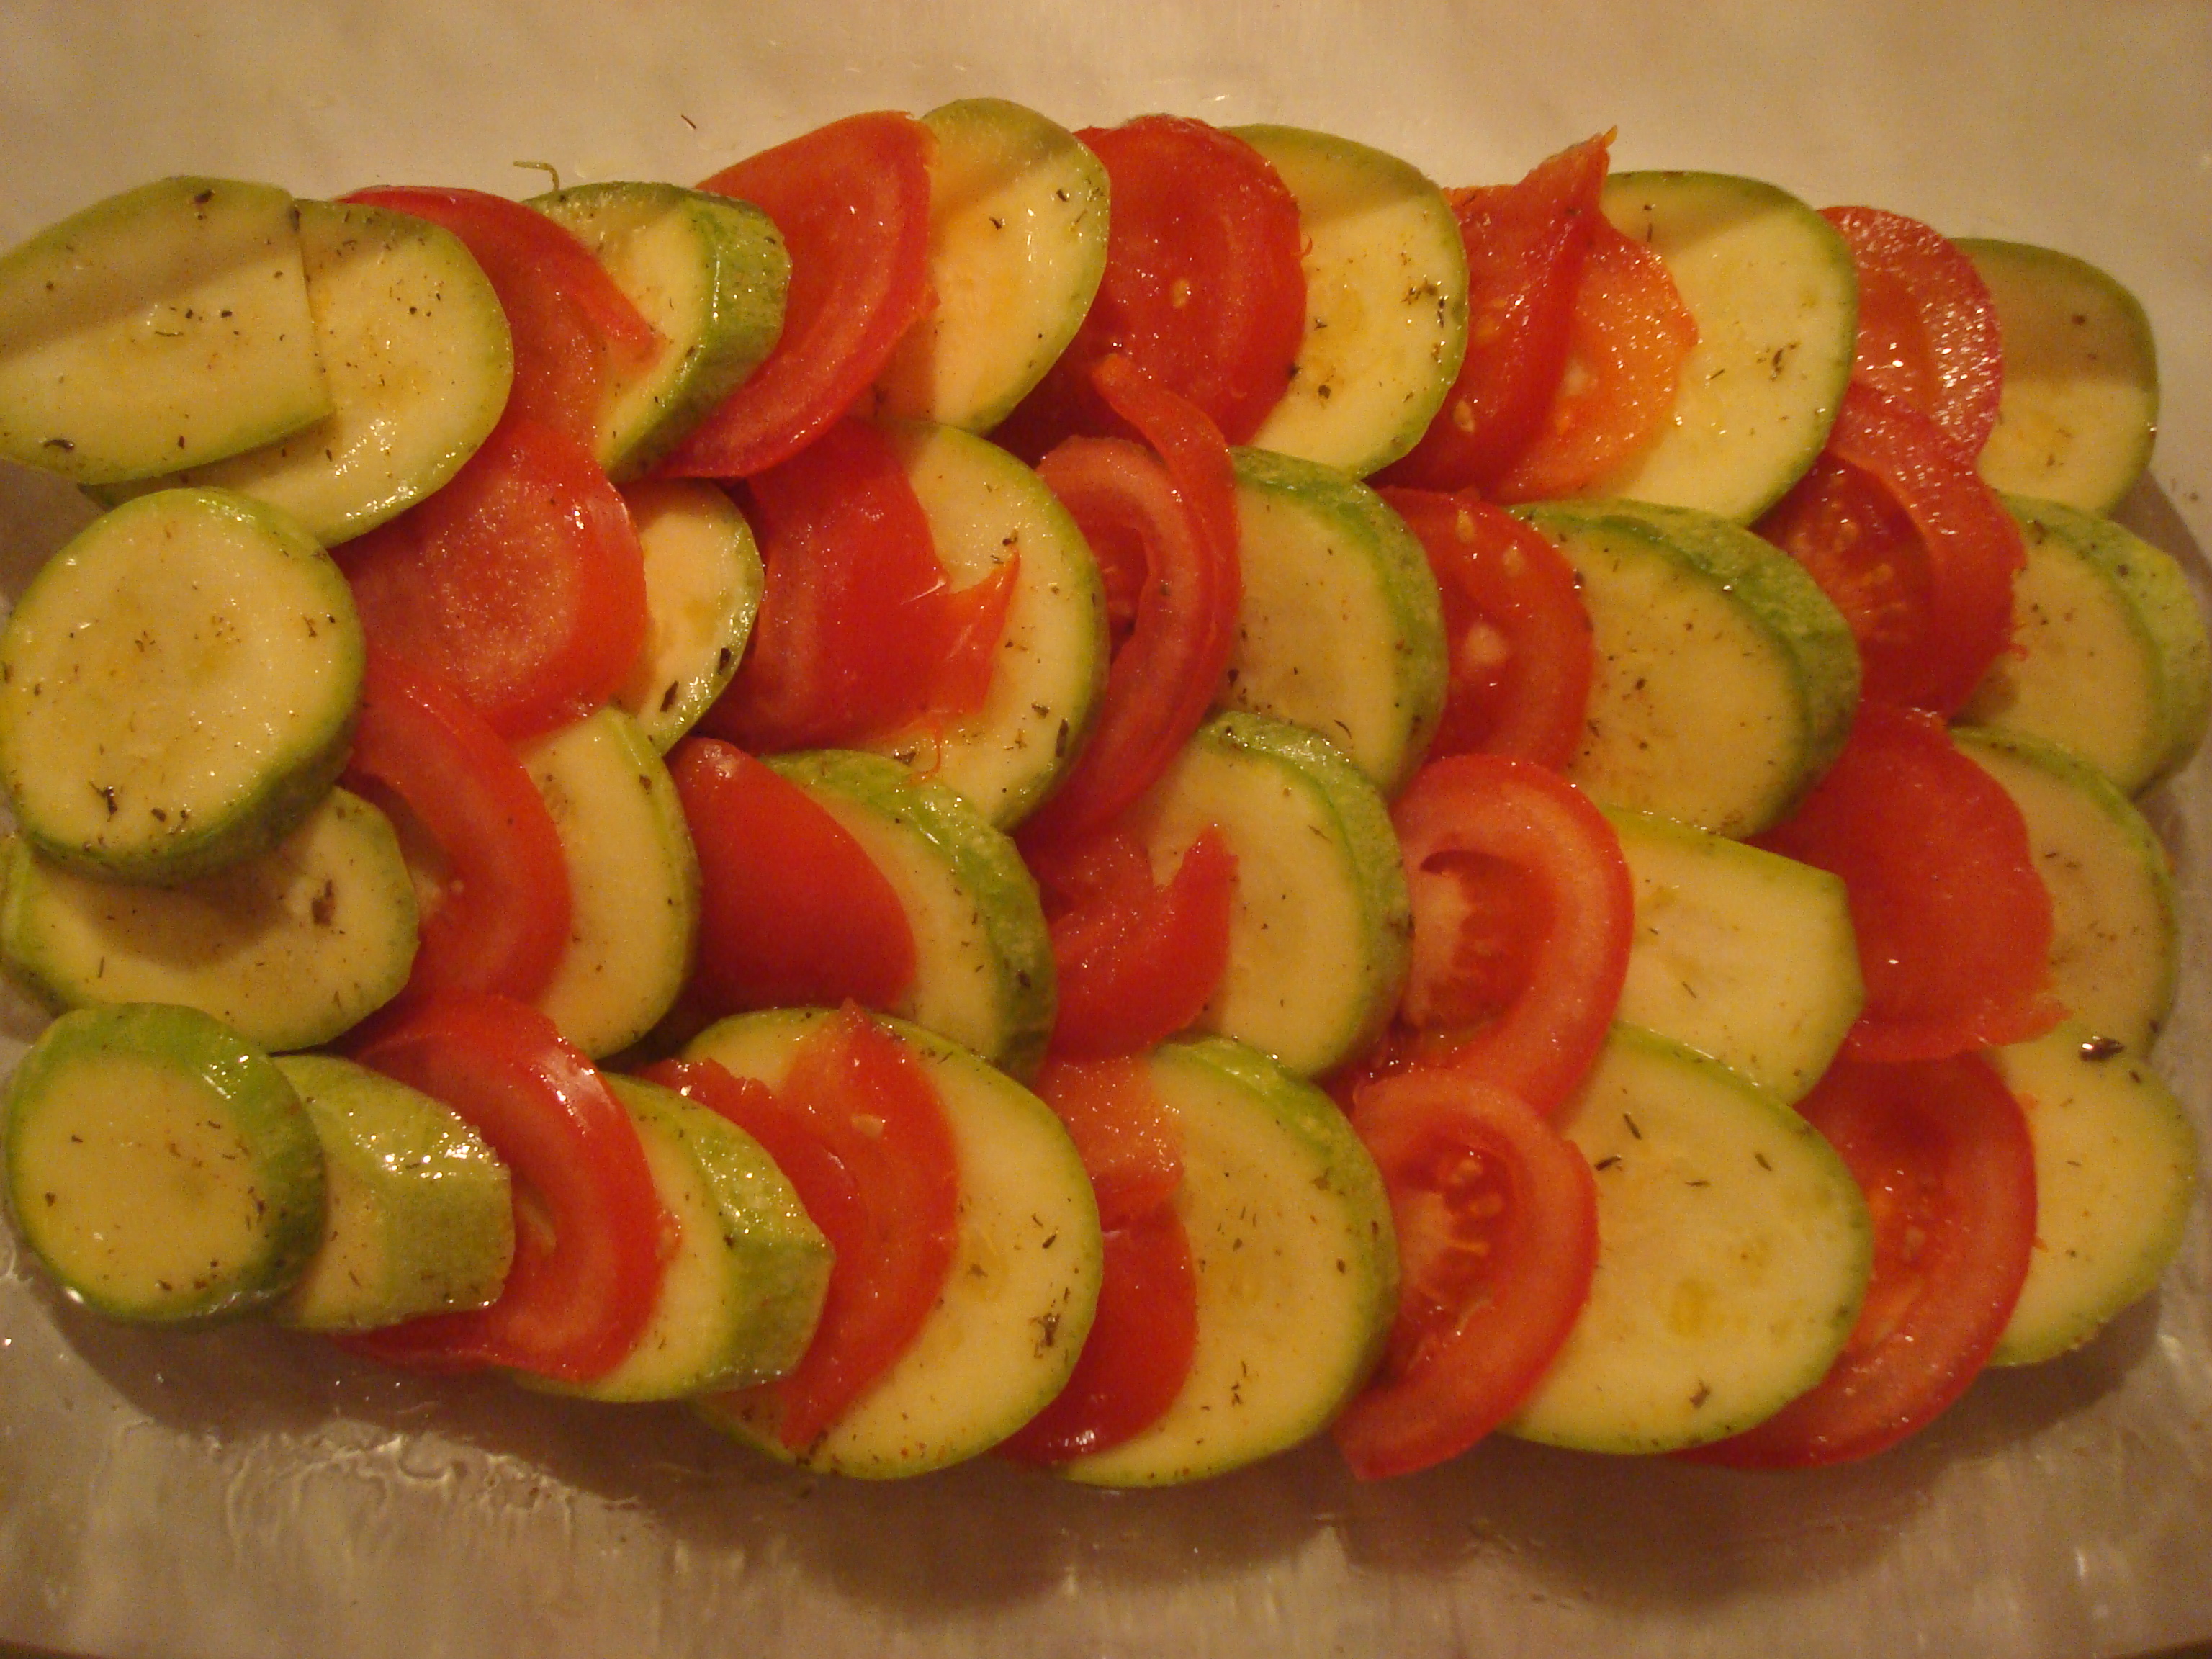 Tomatoes and zucchini dish in preparatio photo